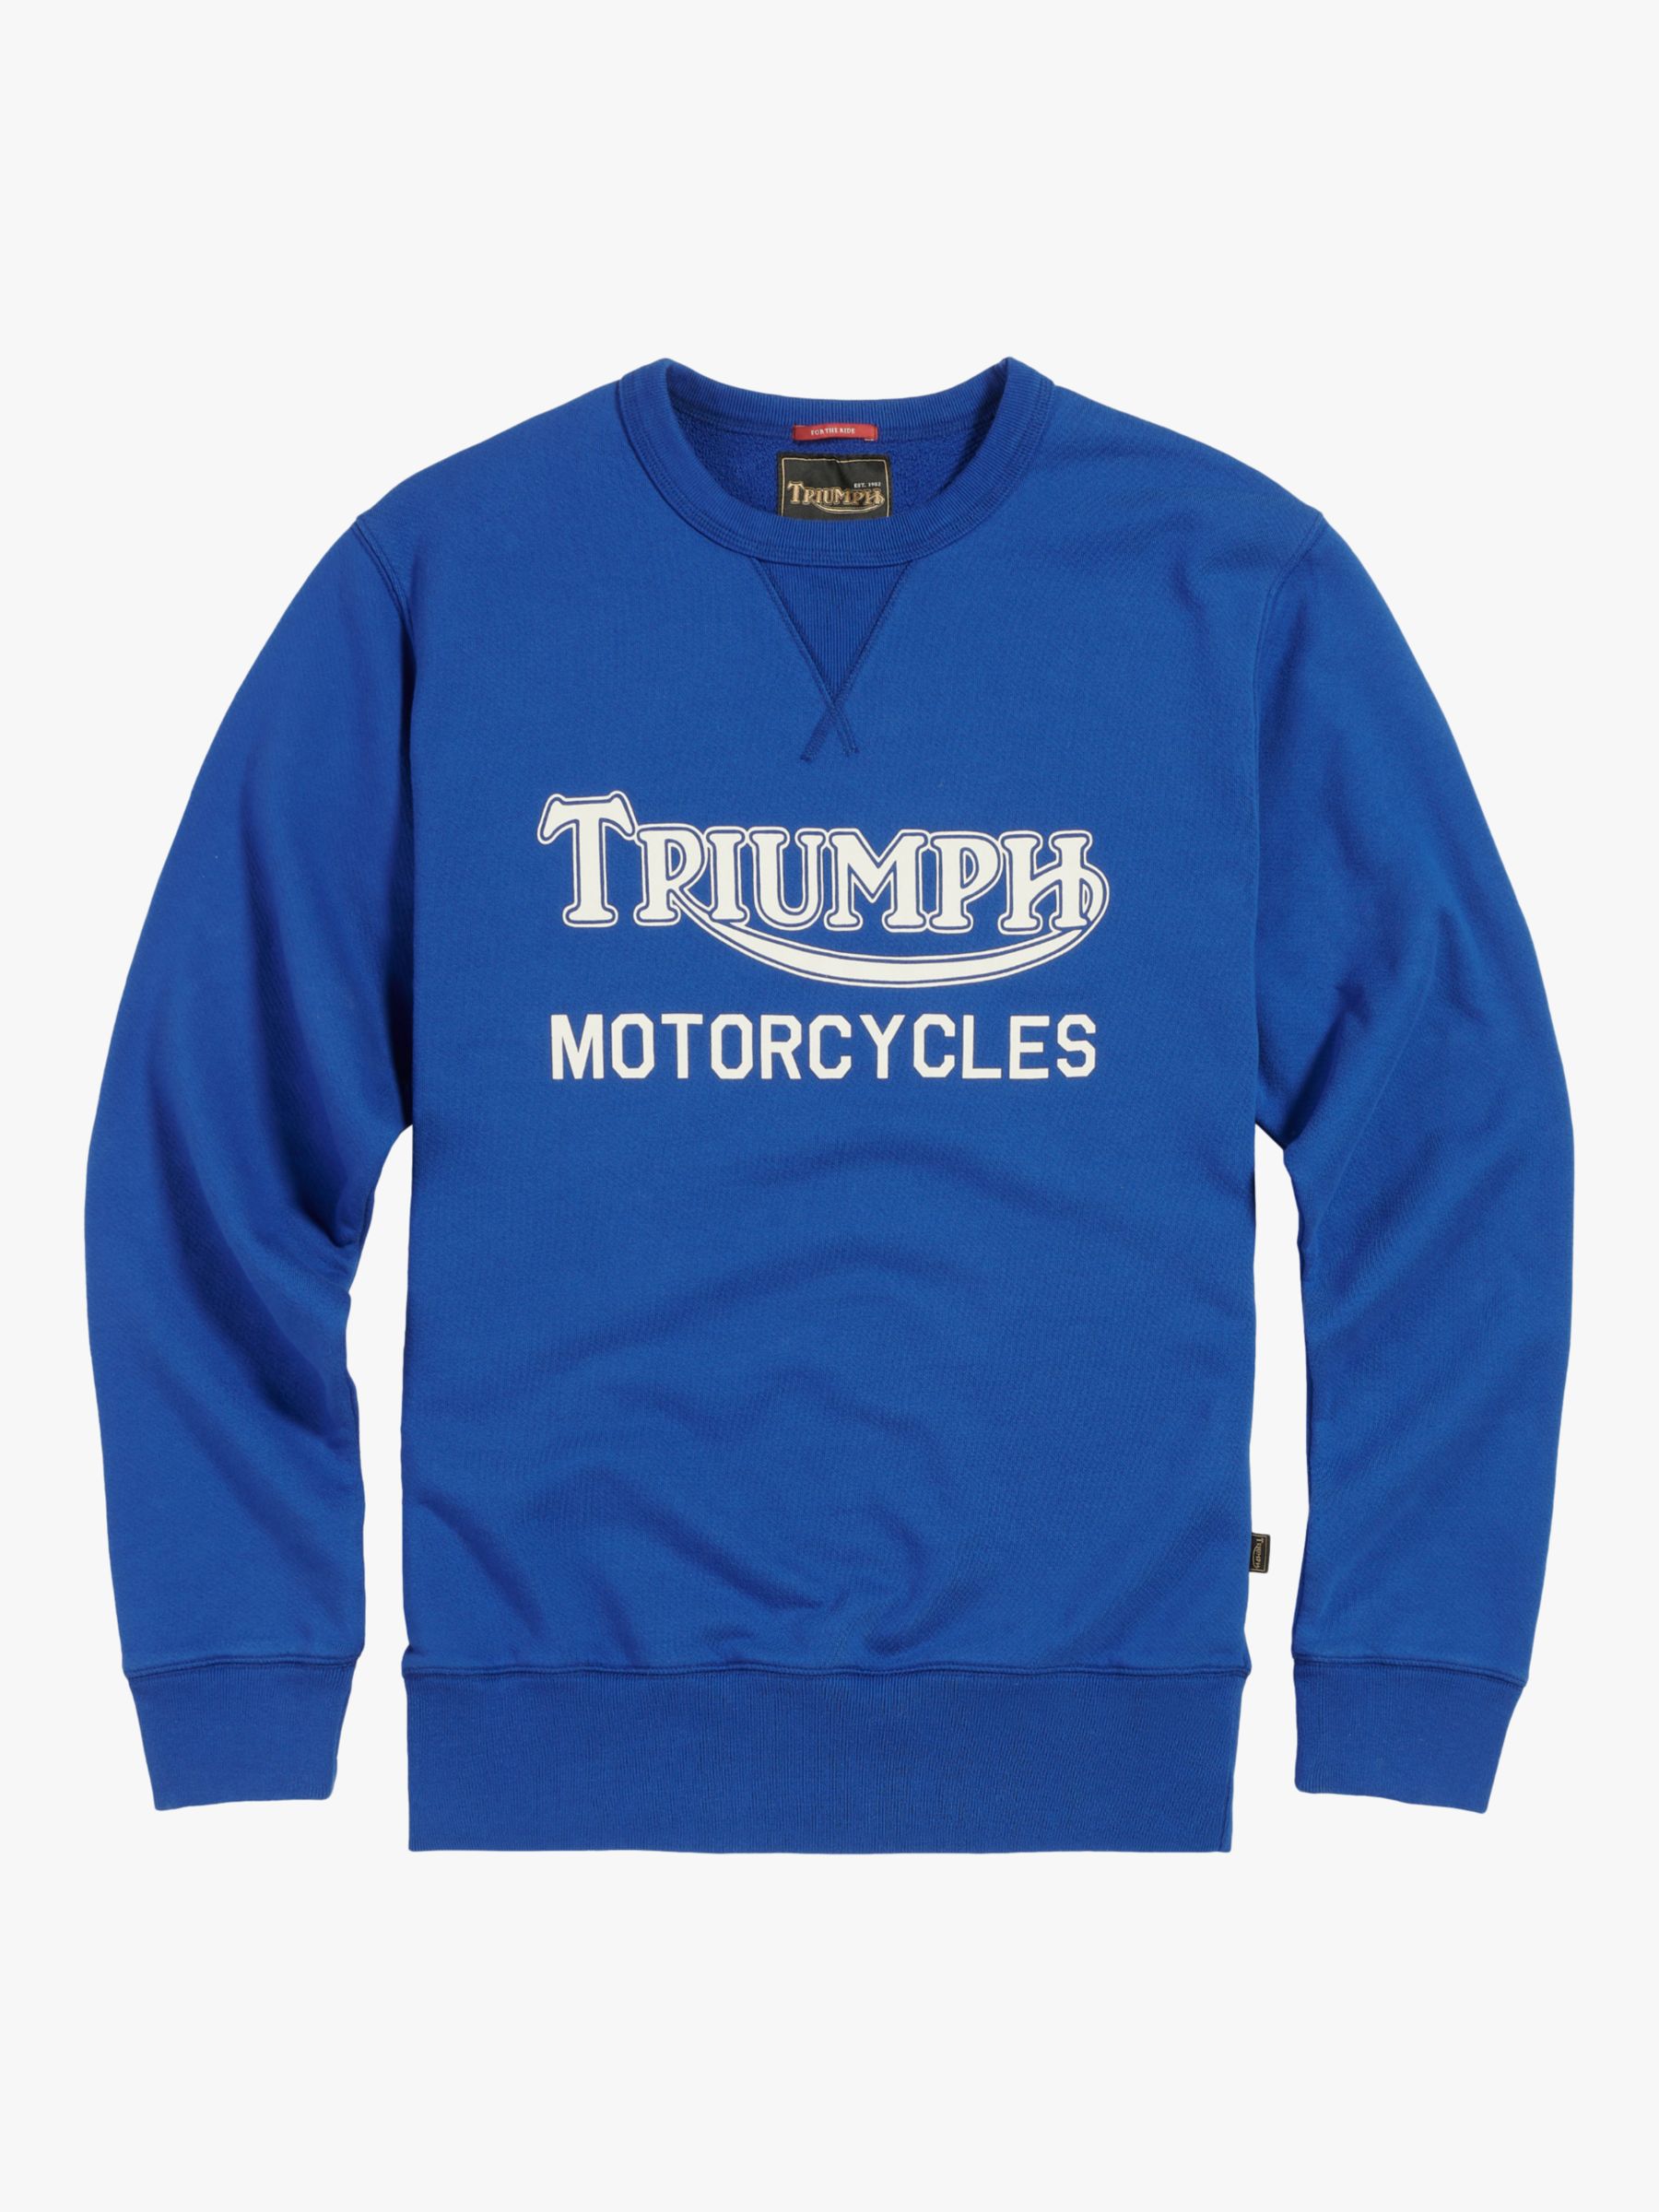 Triumph Motorcycles Radial Sweatshirt, Colbalt, S